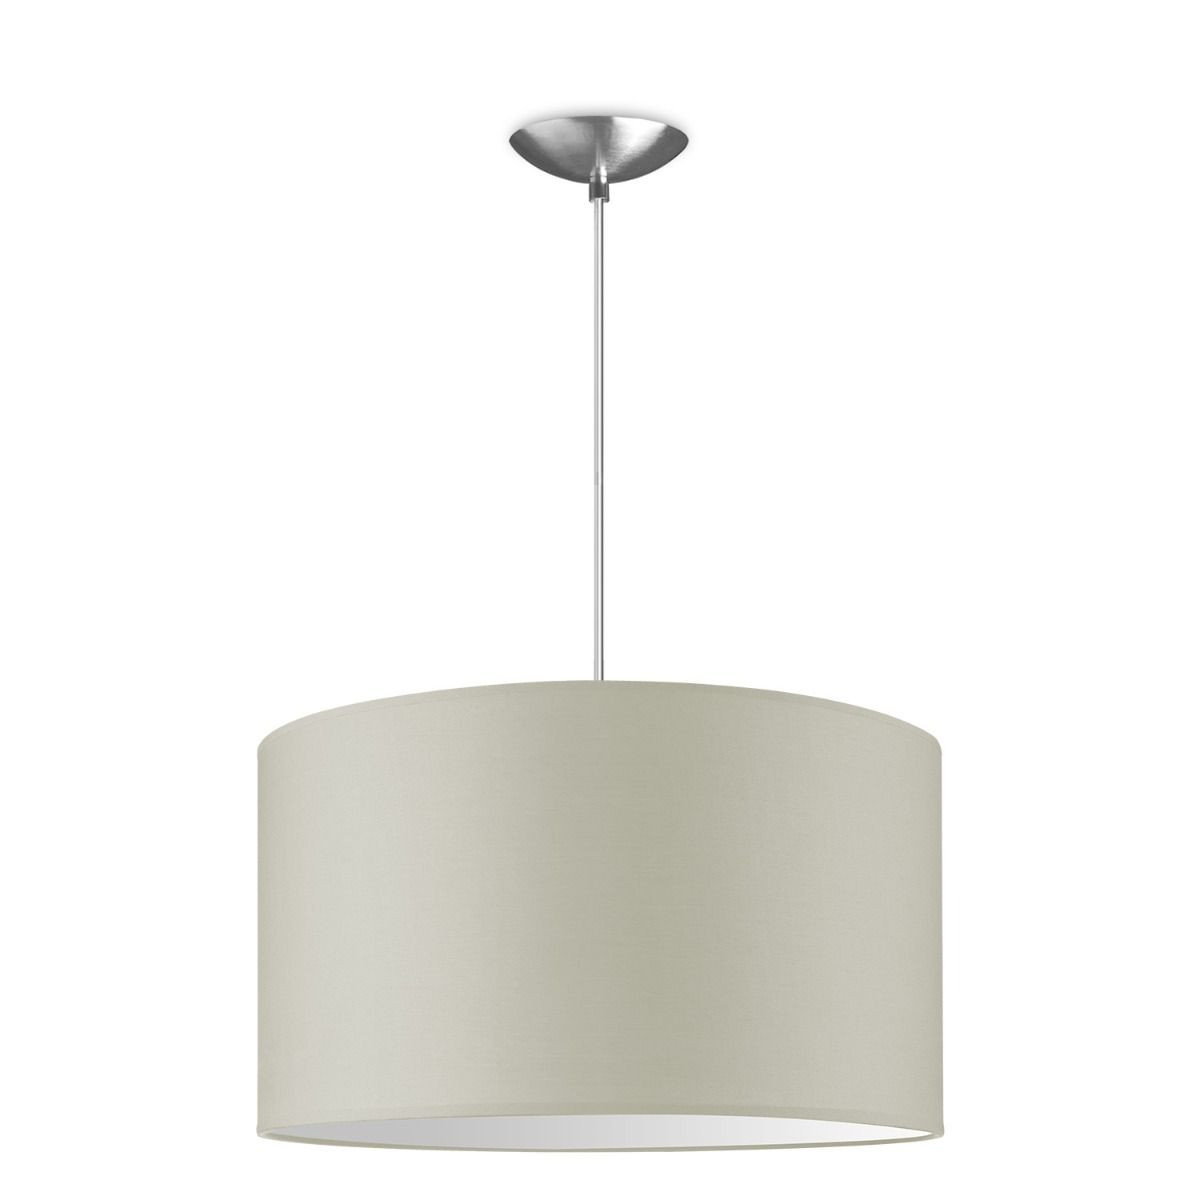 Light depot - hanglamp basic bling Ø 40 cm - warmwit - Outlet